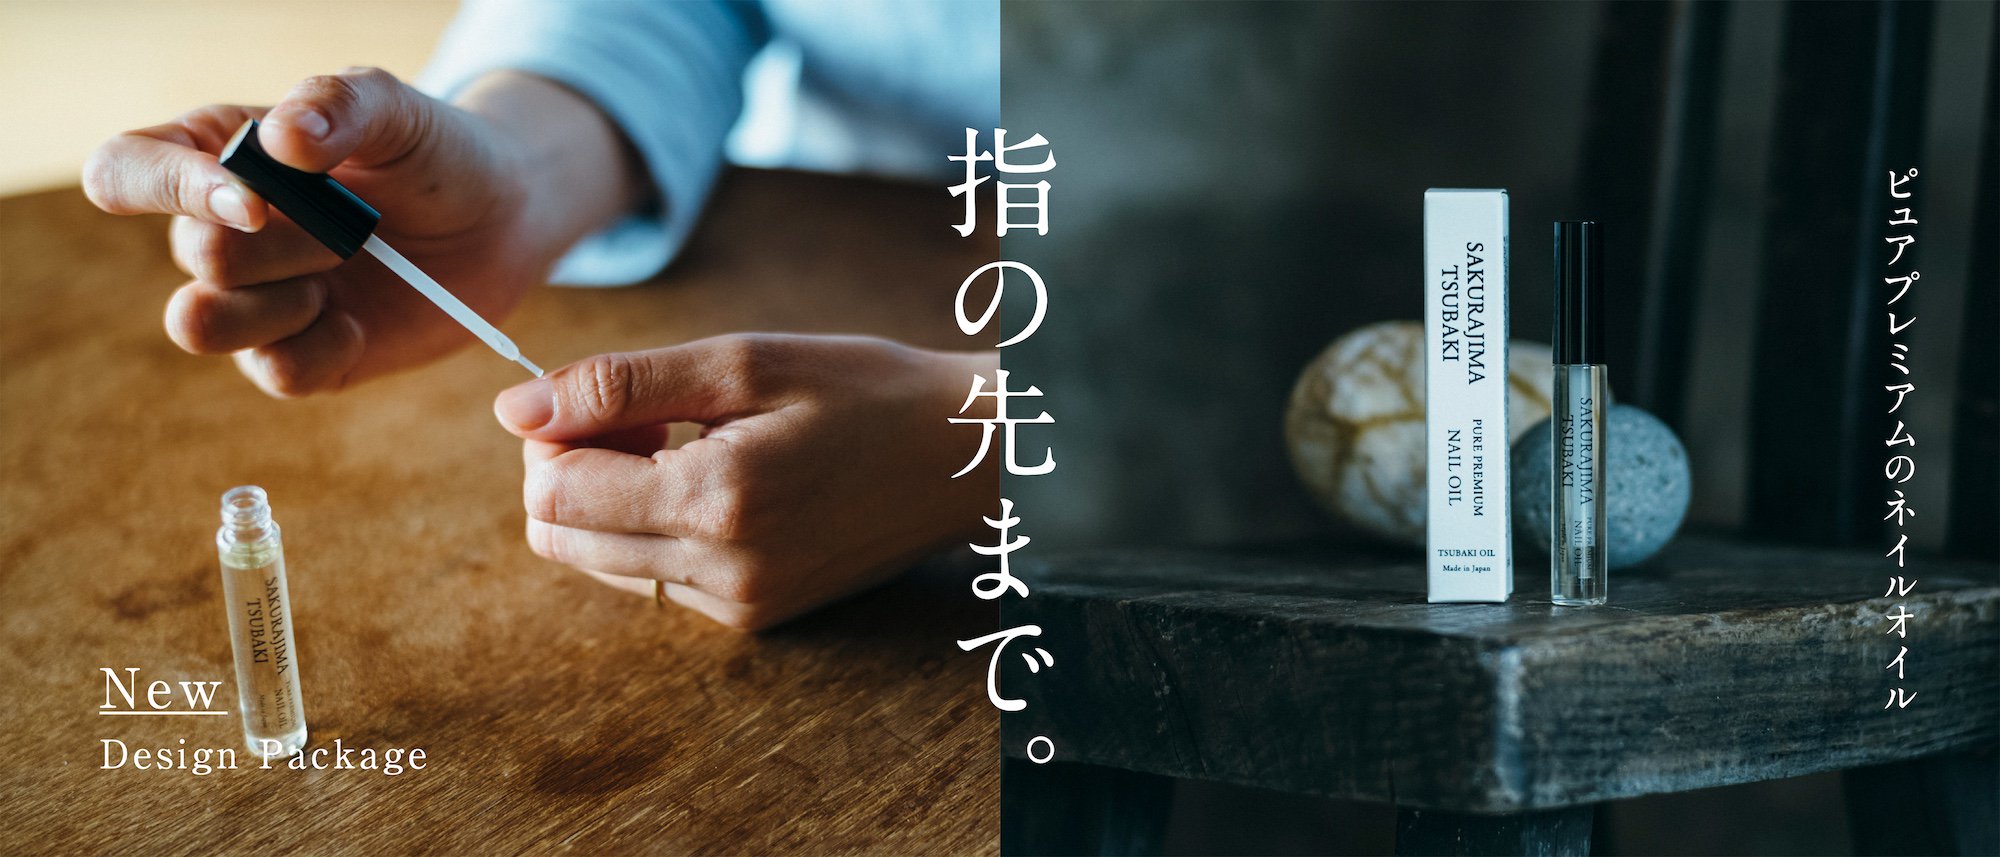 SAKURAJIMA TSUBAKI | 椿油の通販なら 「桜島の椿油」